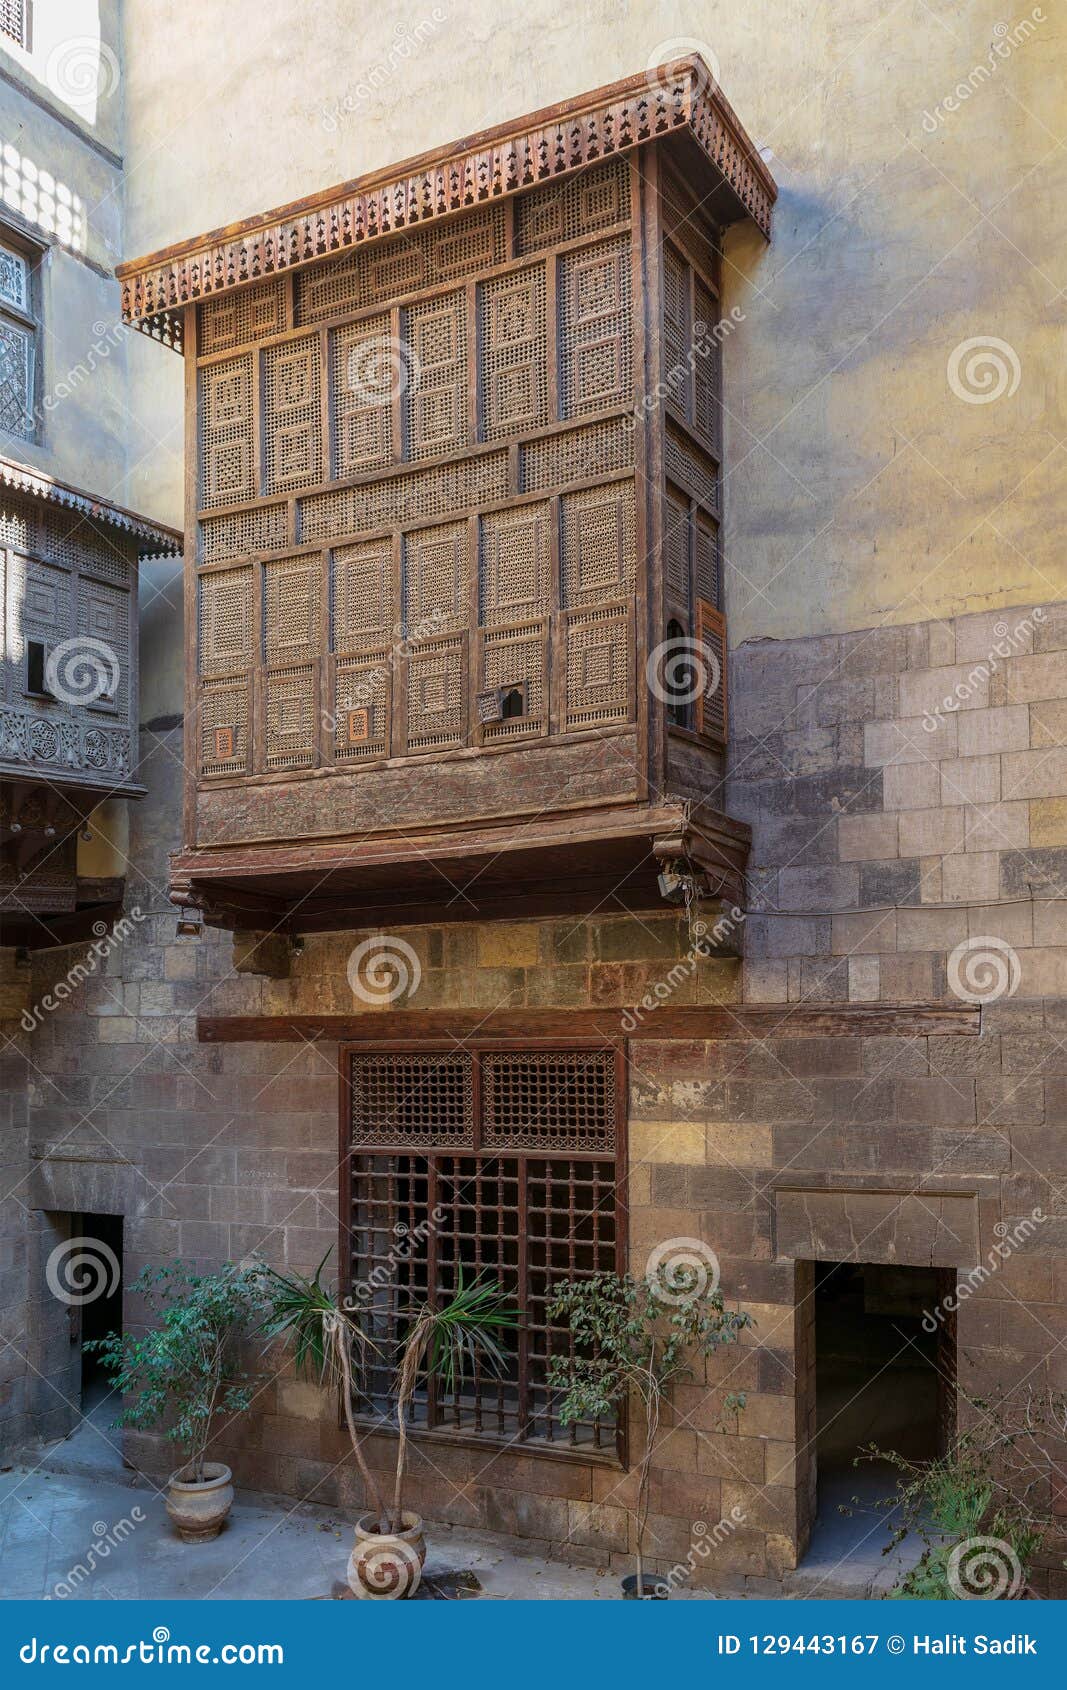 facade of zeinab khatoun historic house with mamluk era style oriel window mashrabiya, cairo, egypt